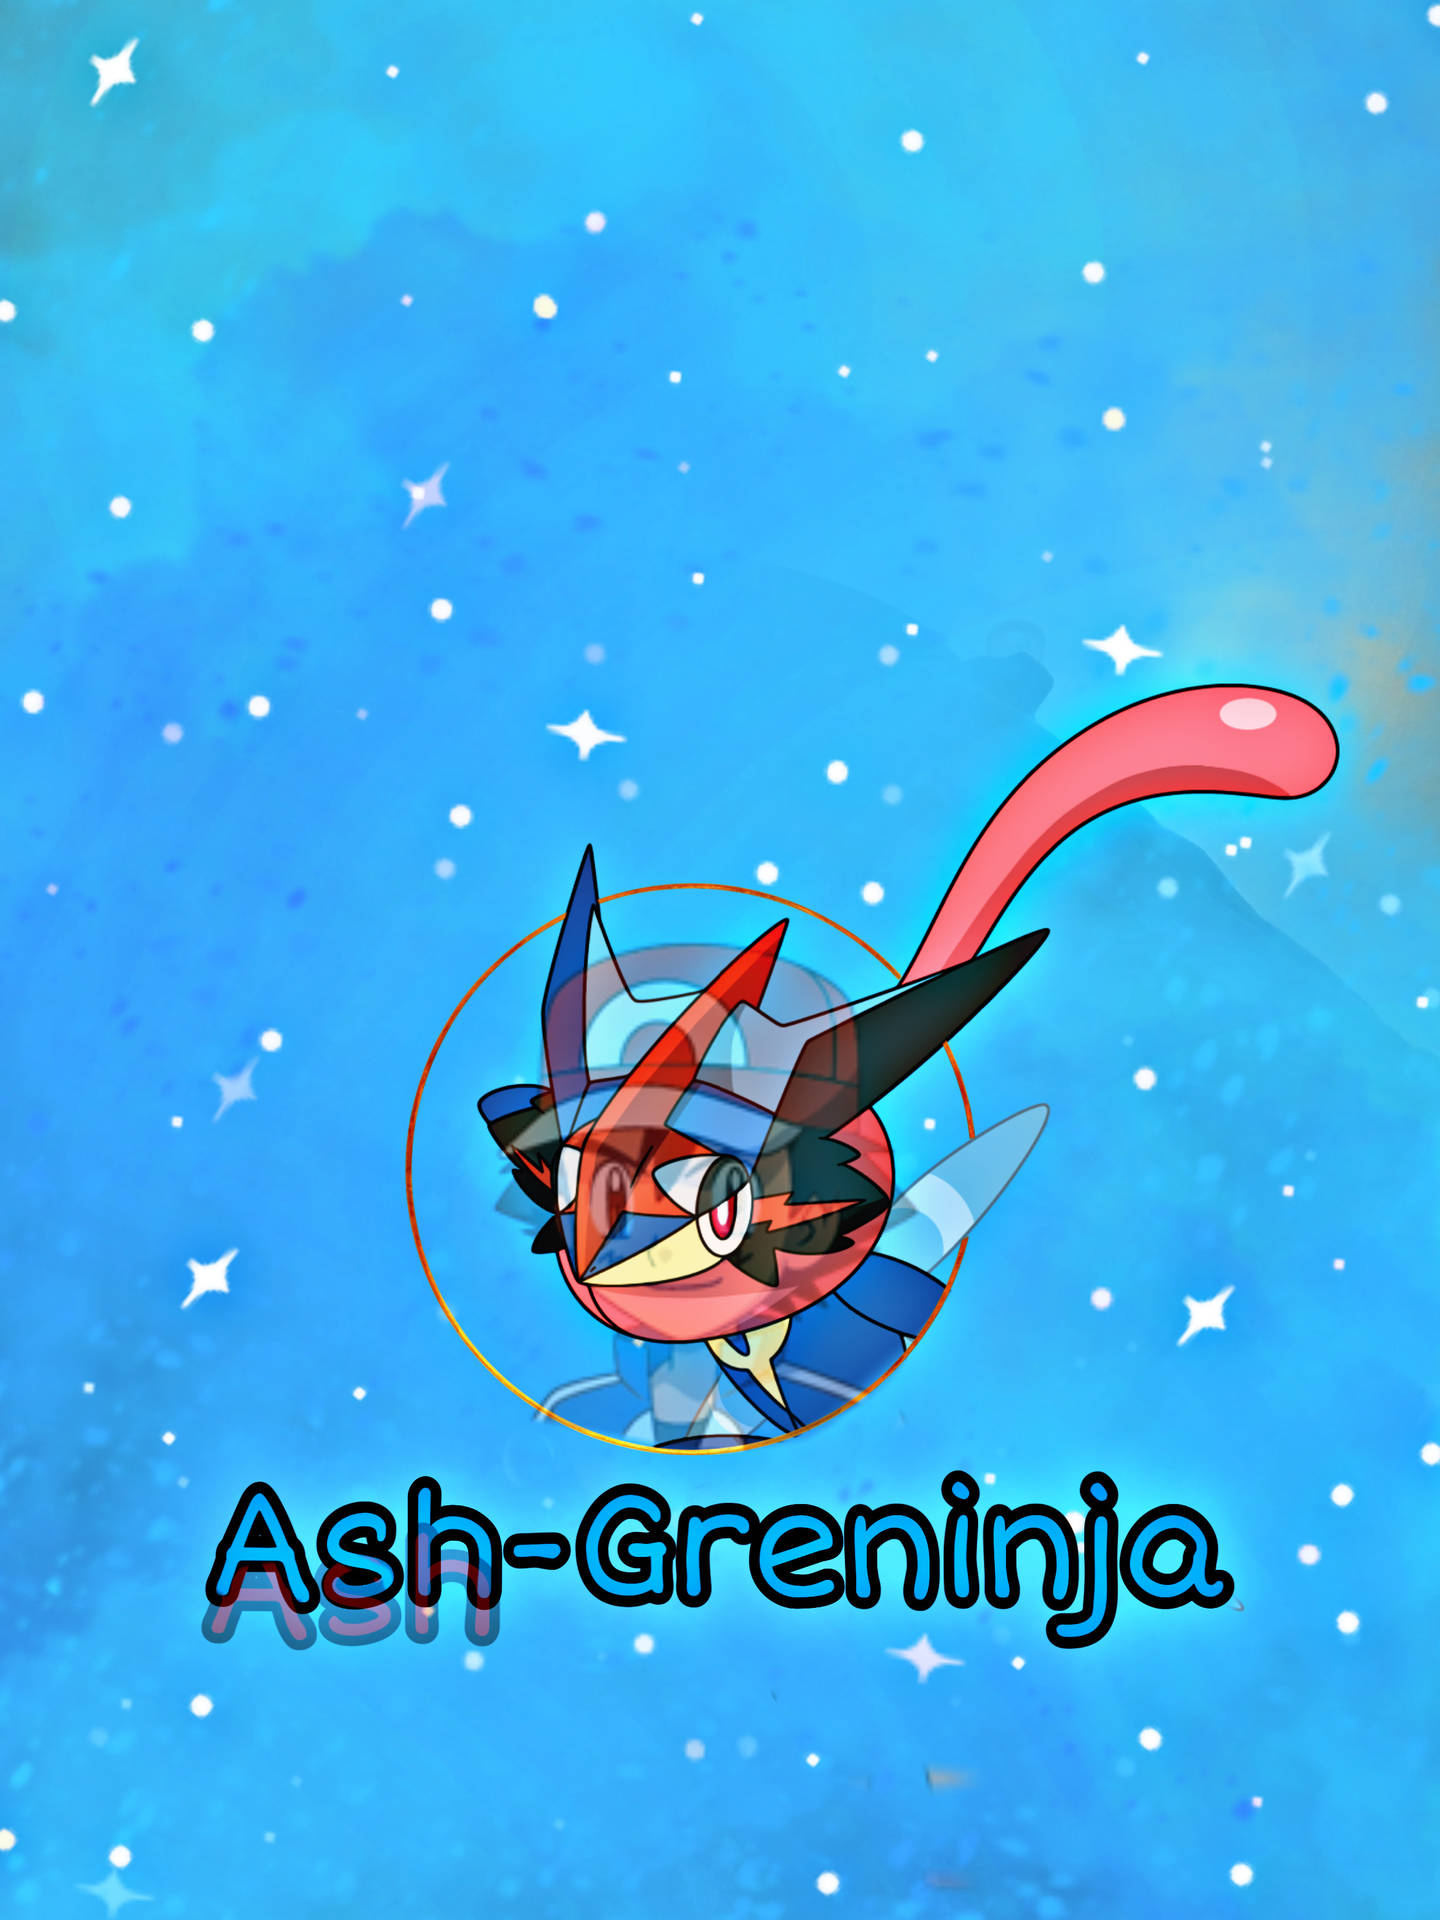 Cute Ash-greninja Background